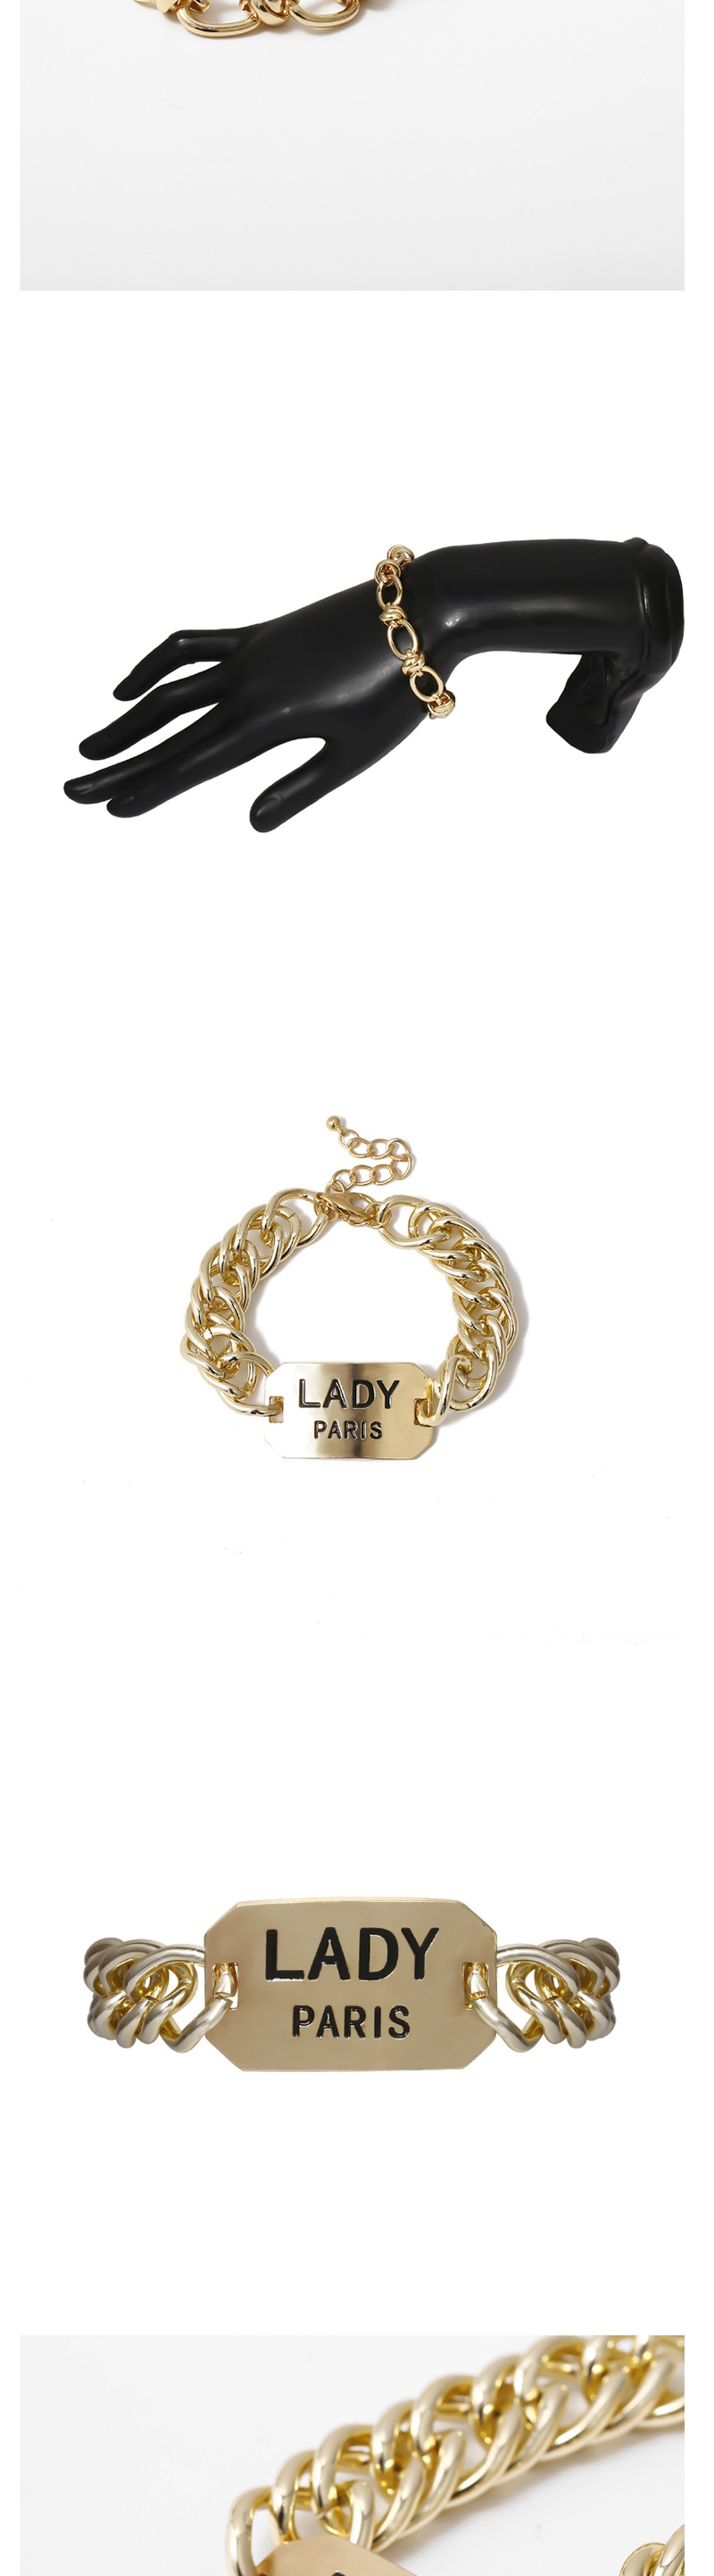 Fashion Golden Acrylic Love Circle Geometric Bracelet,Fashion Bracelets